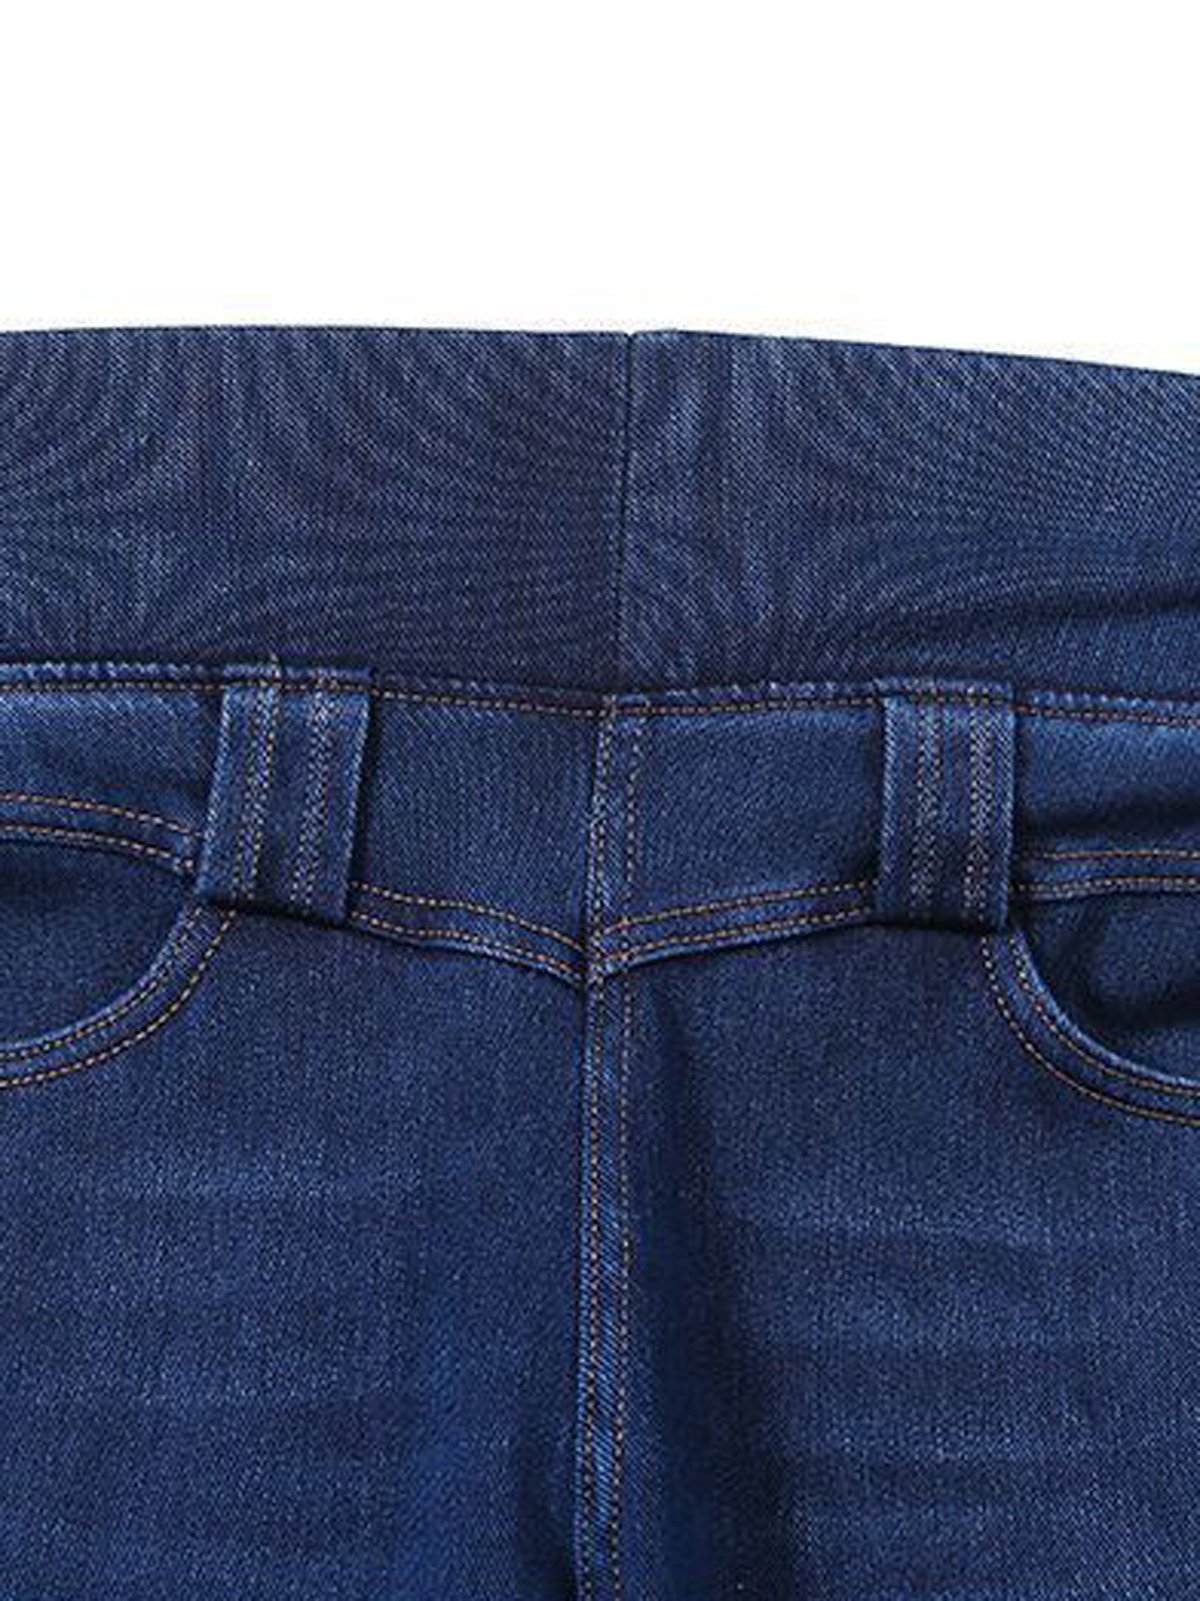 Tight Casual Denim Plain Jeans